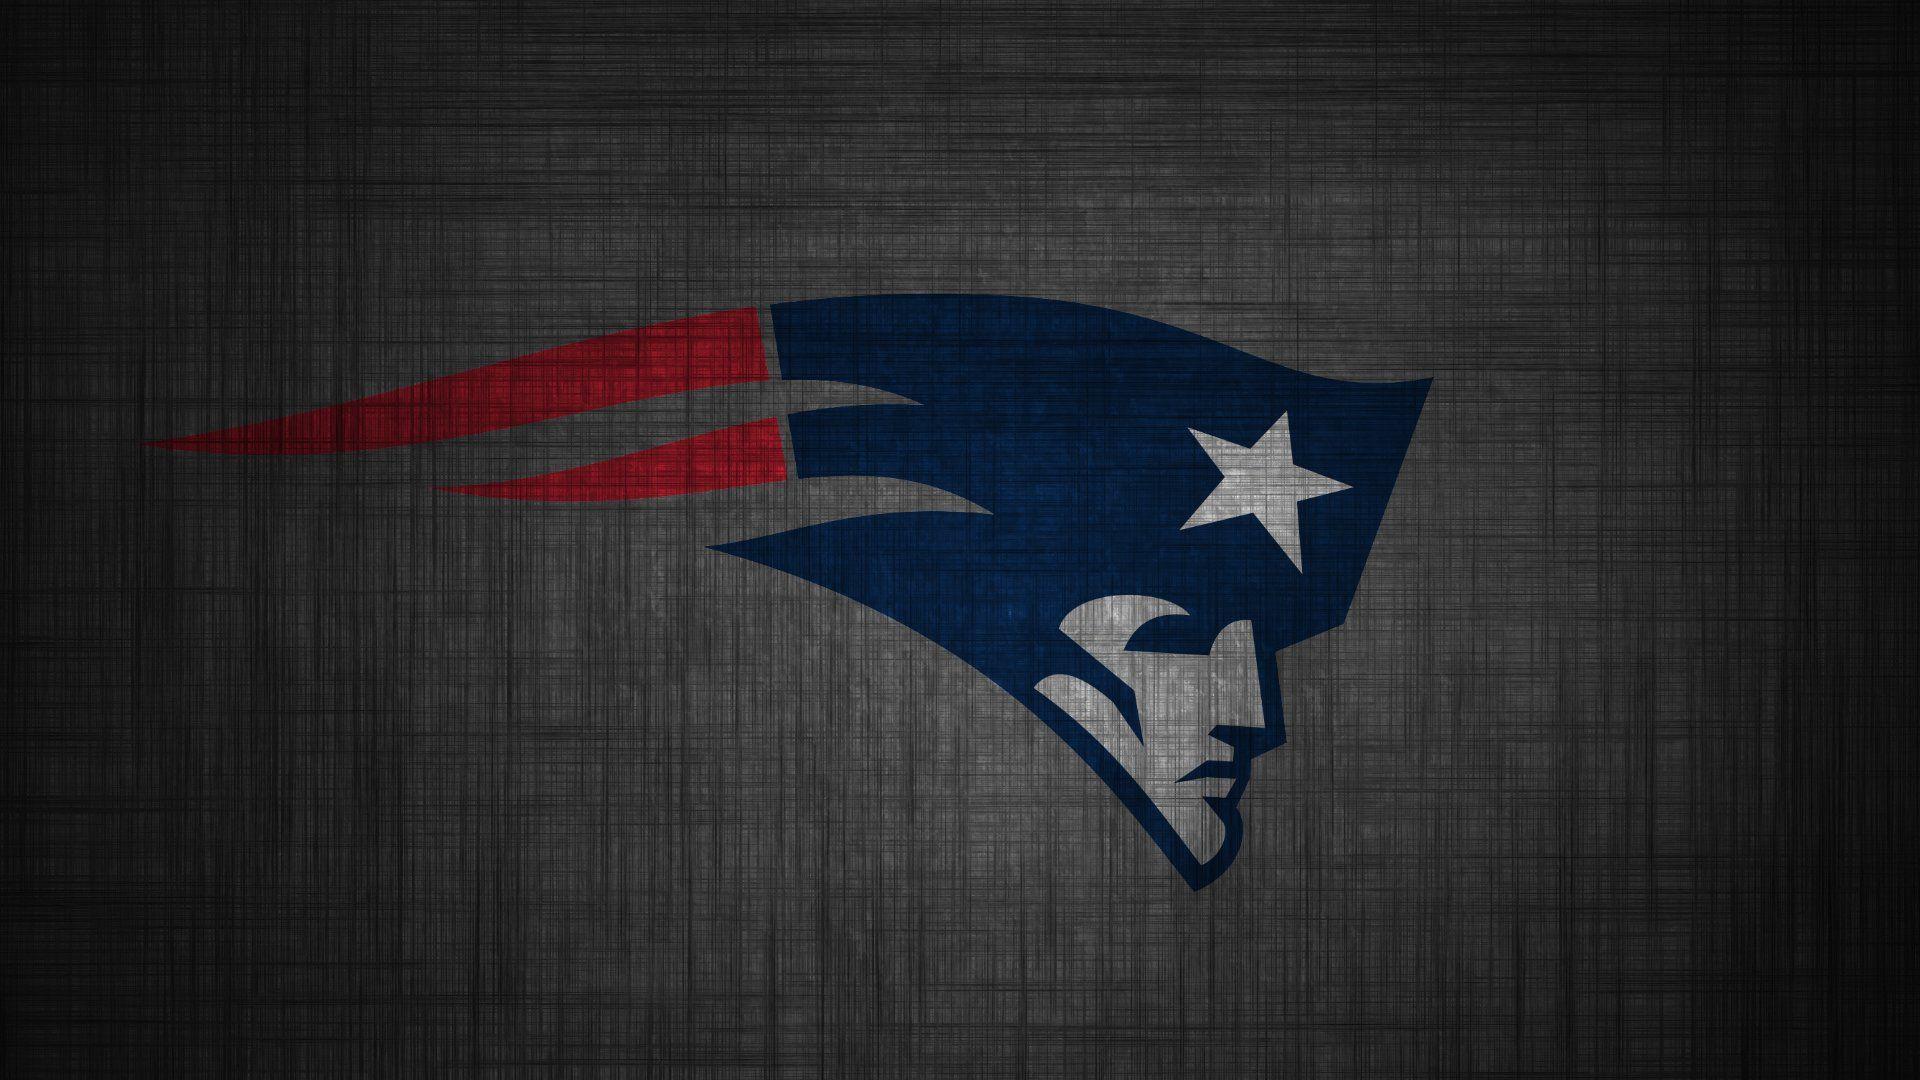 New England Patriots Logo Wallpaper 55965 1920x1080 px